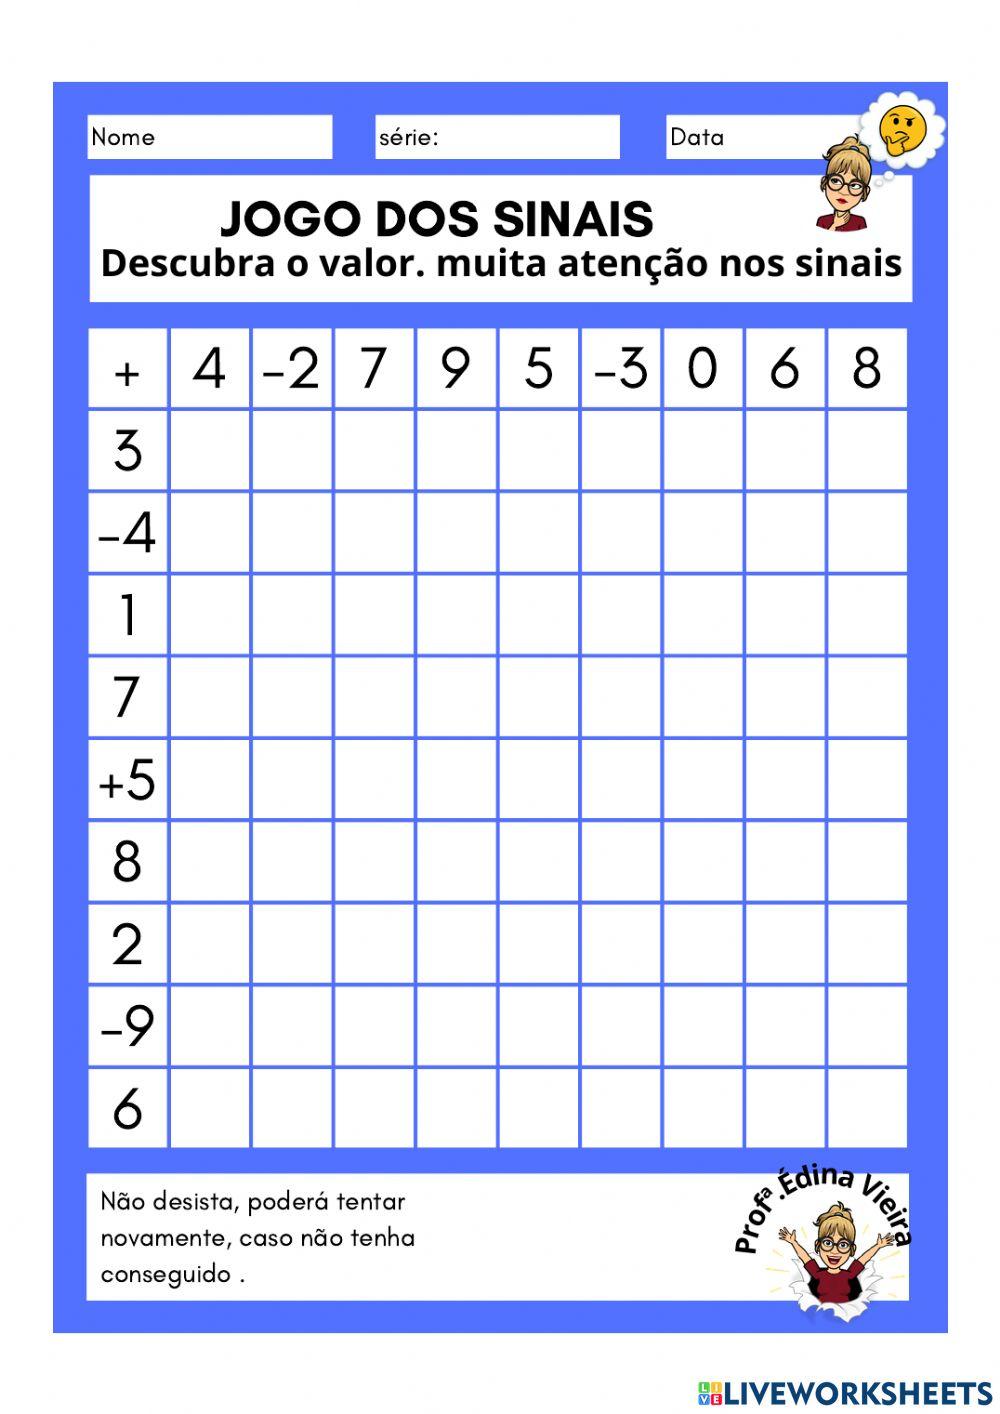 Lista de Exercícios sobre jogo de sinais - Brasil Escola